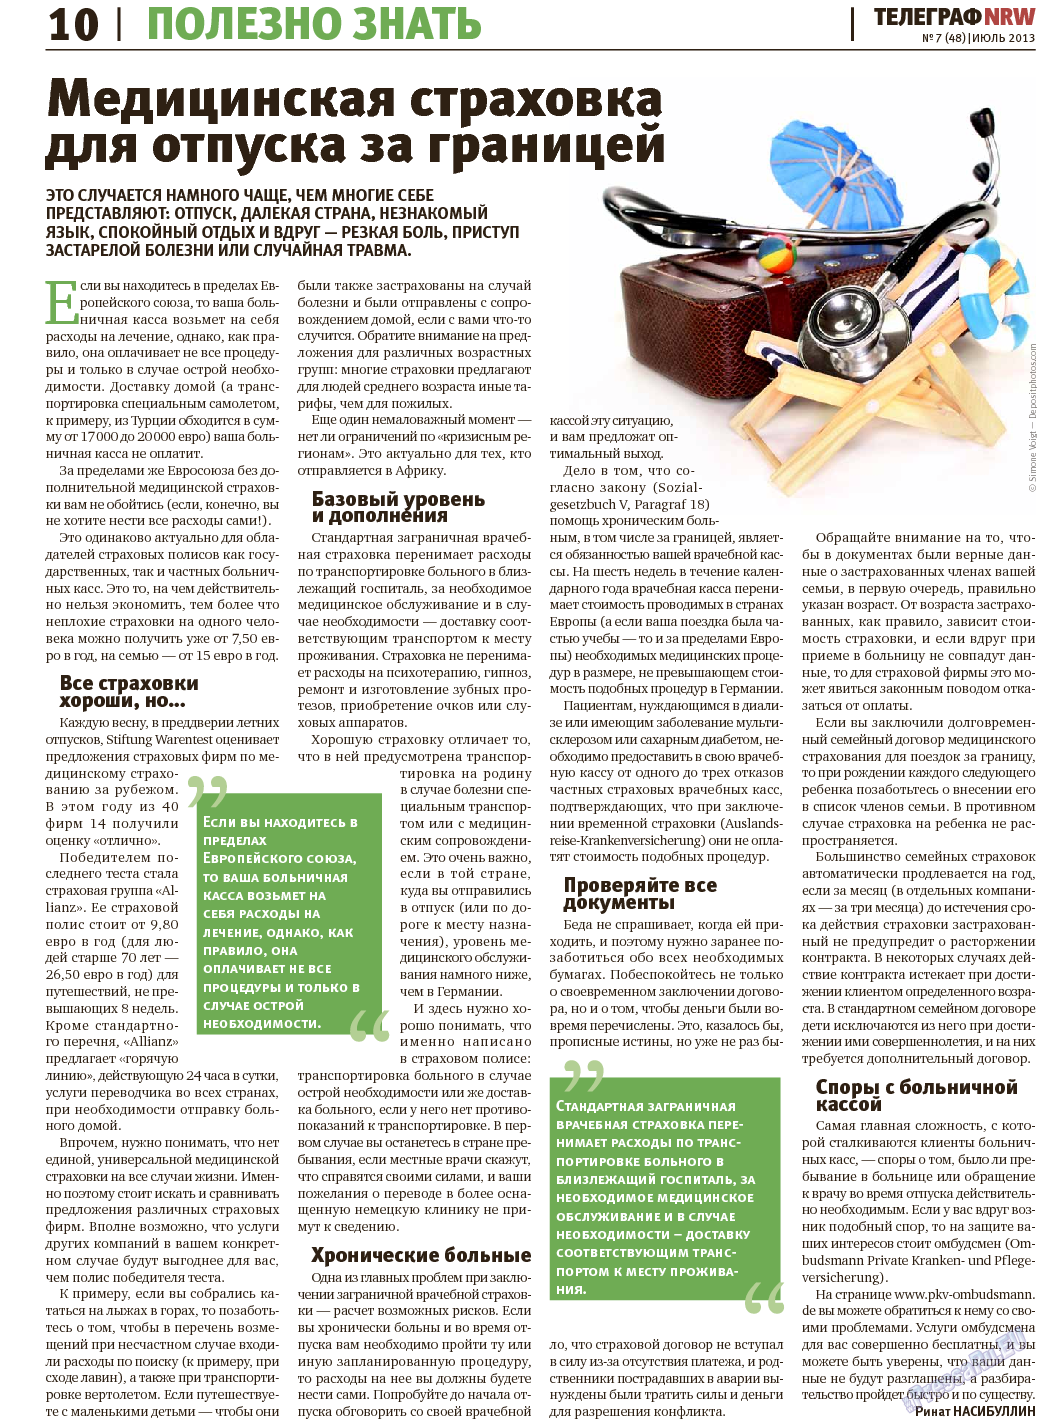 Телеграф NRW, газета. 2013 №7 стр.10